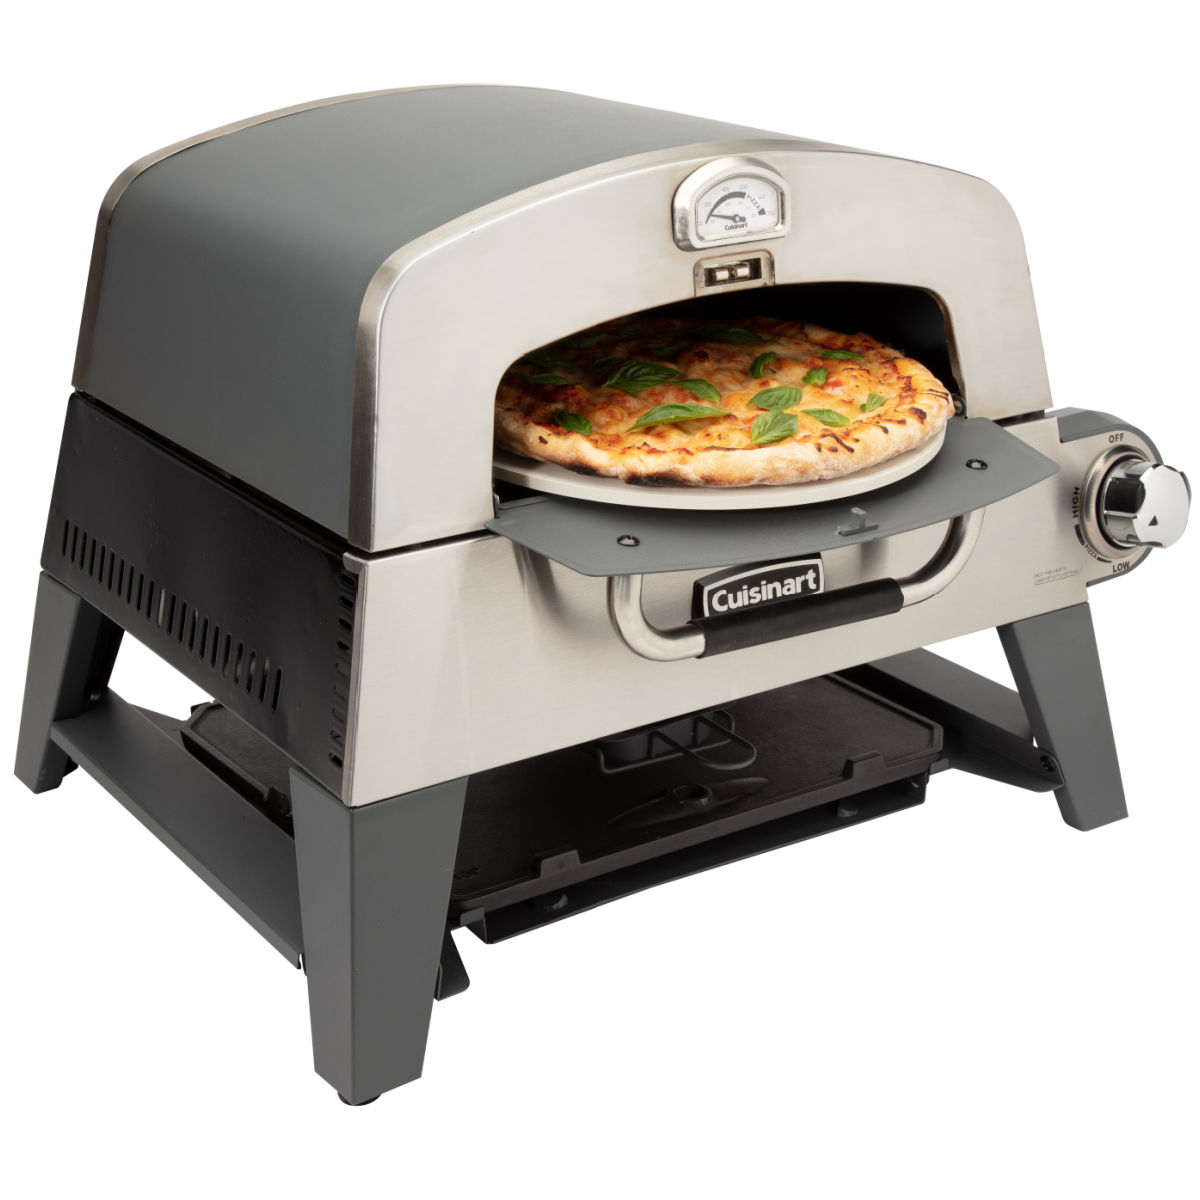 Cuisinart CGG-403 3-in-1 Pizza Oven Plus